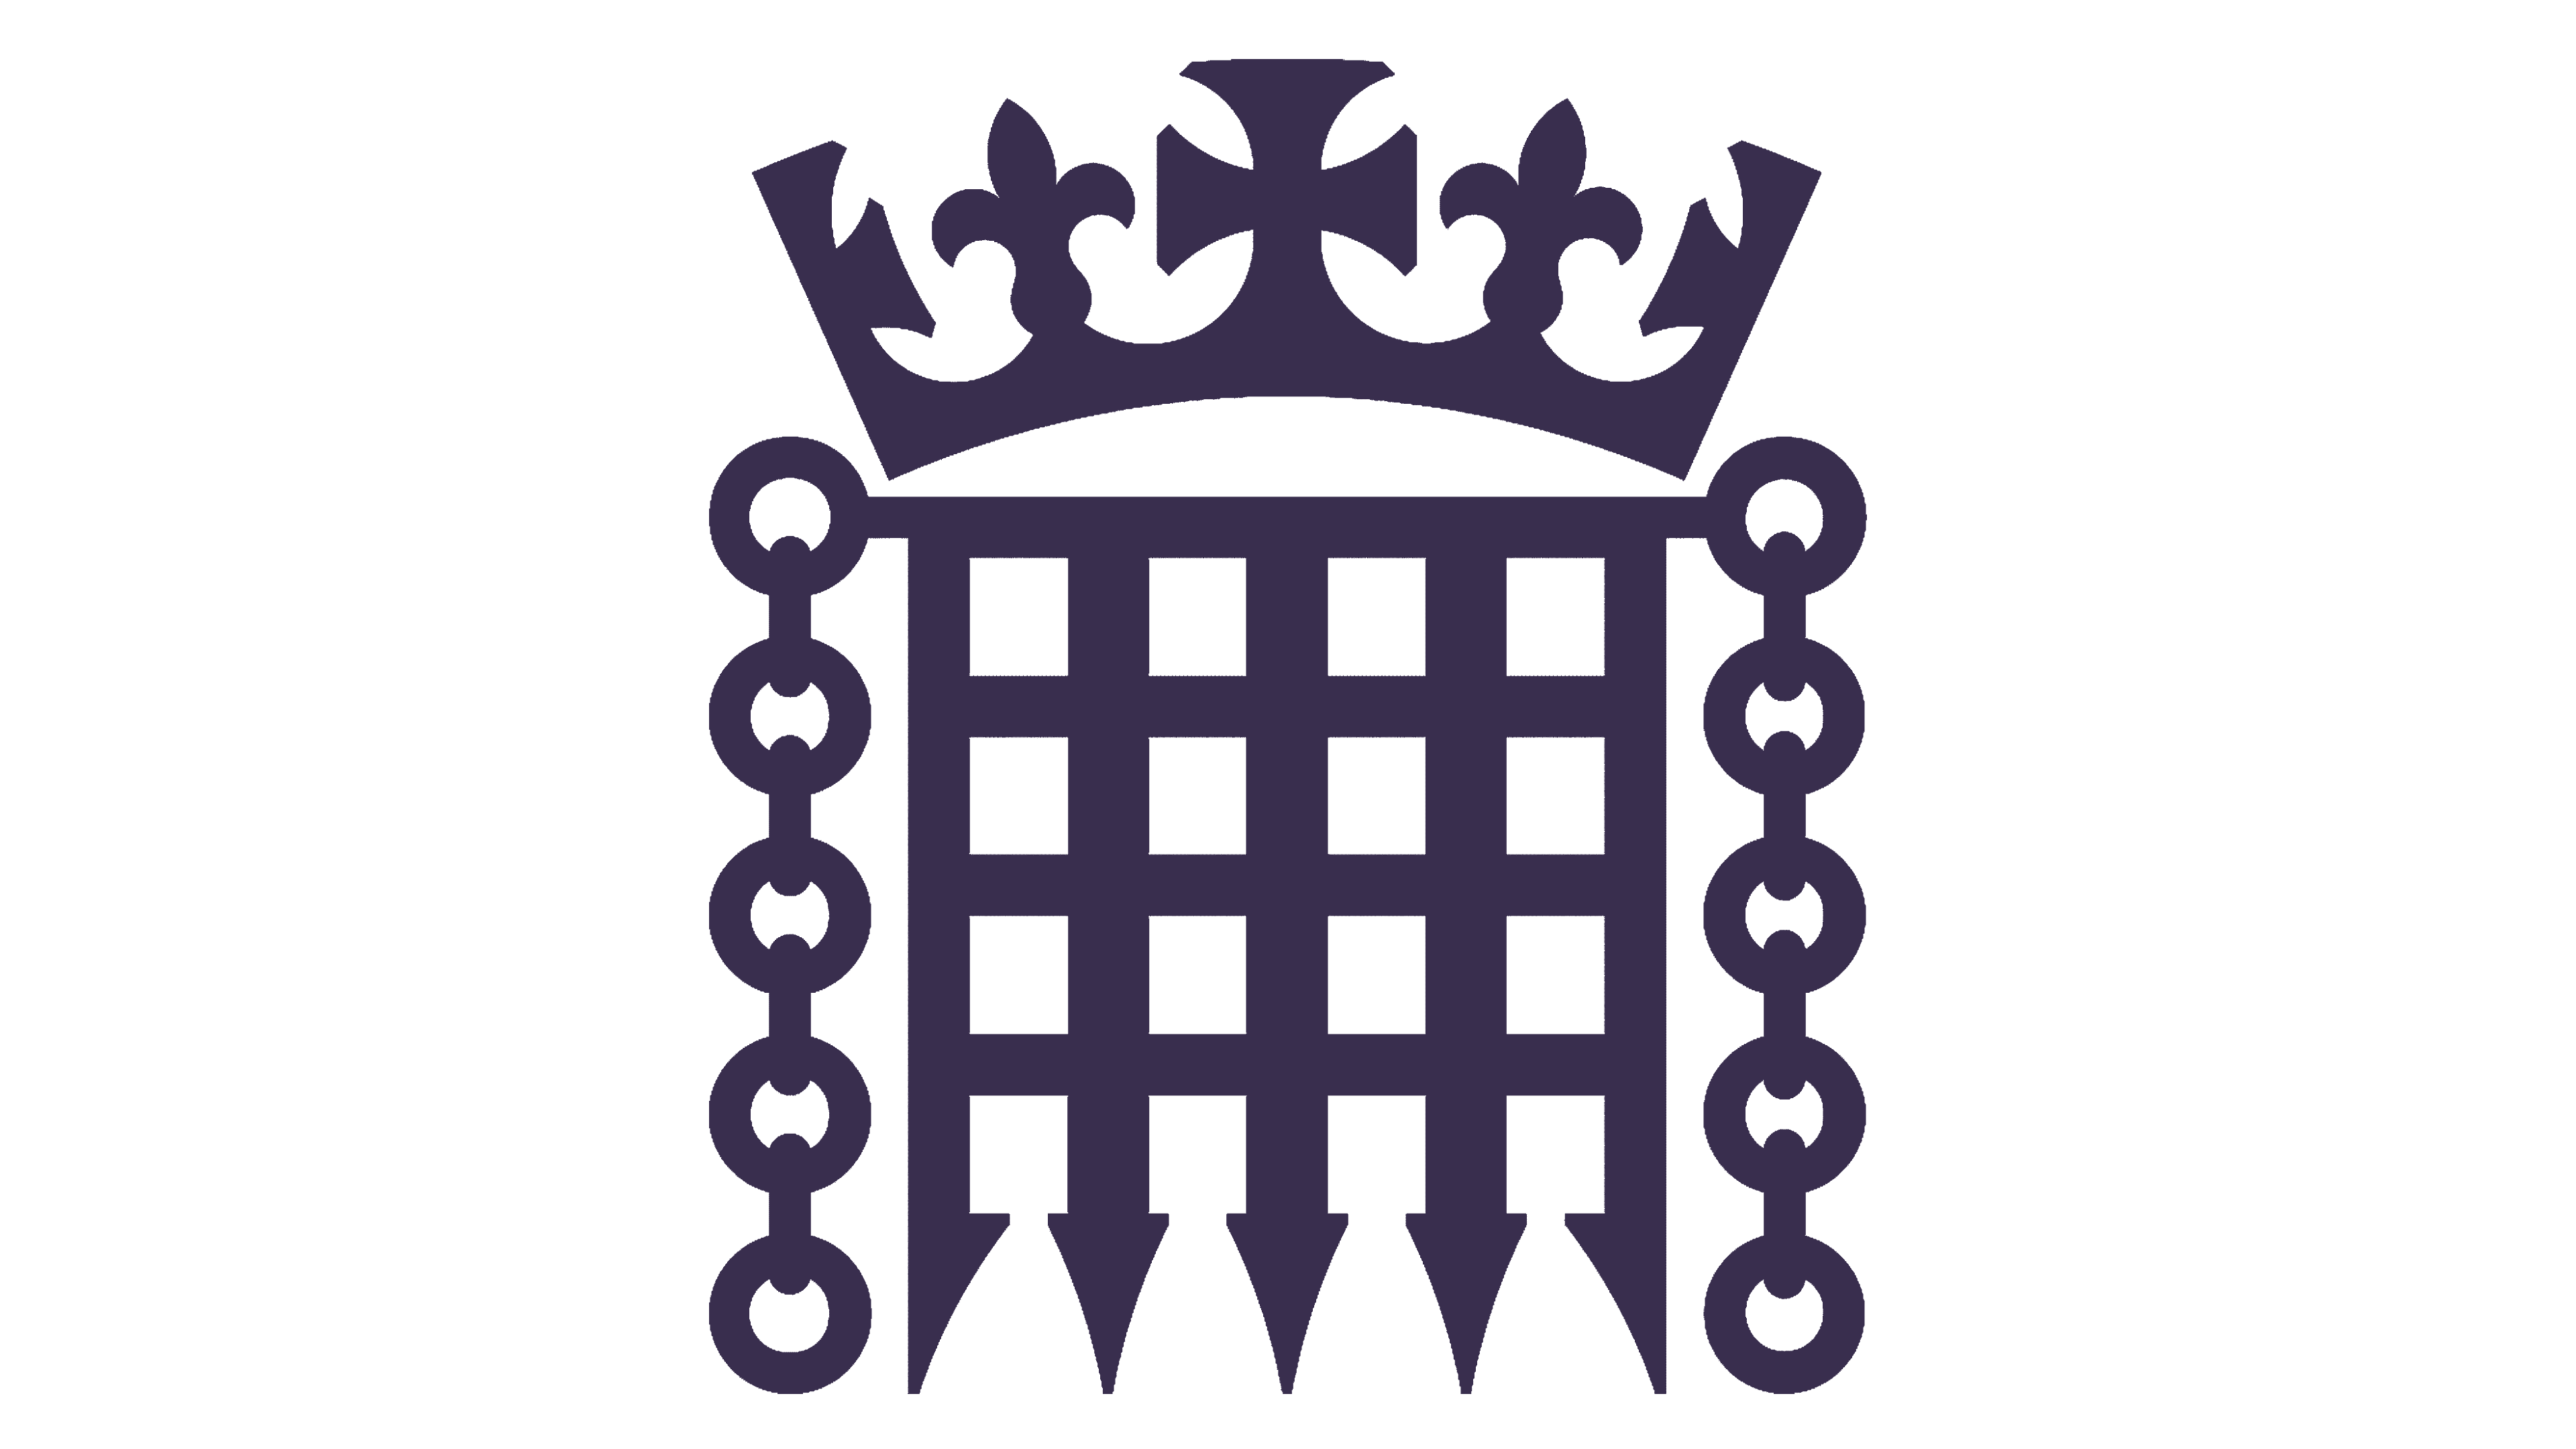 uk-parliament-symbolddiw4.png